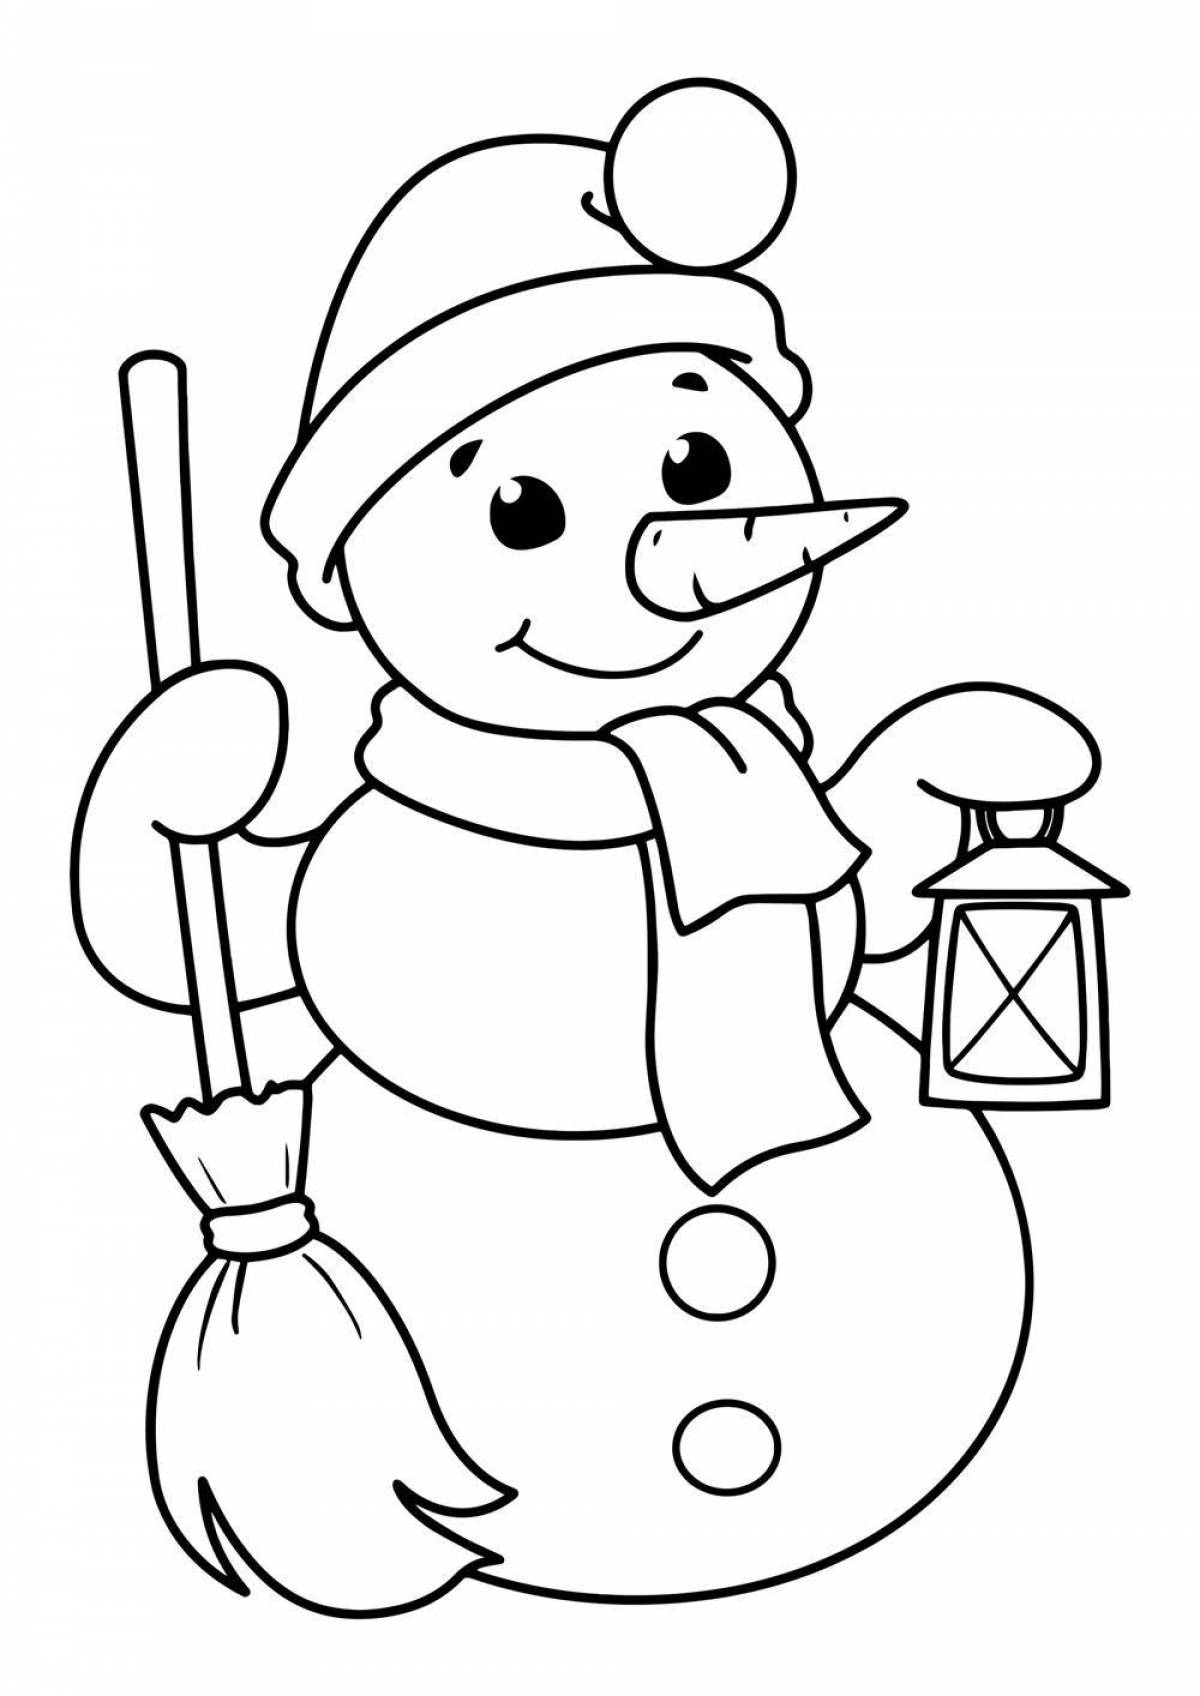 Coloring page adorable mega snowman